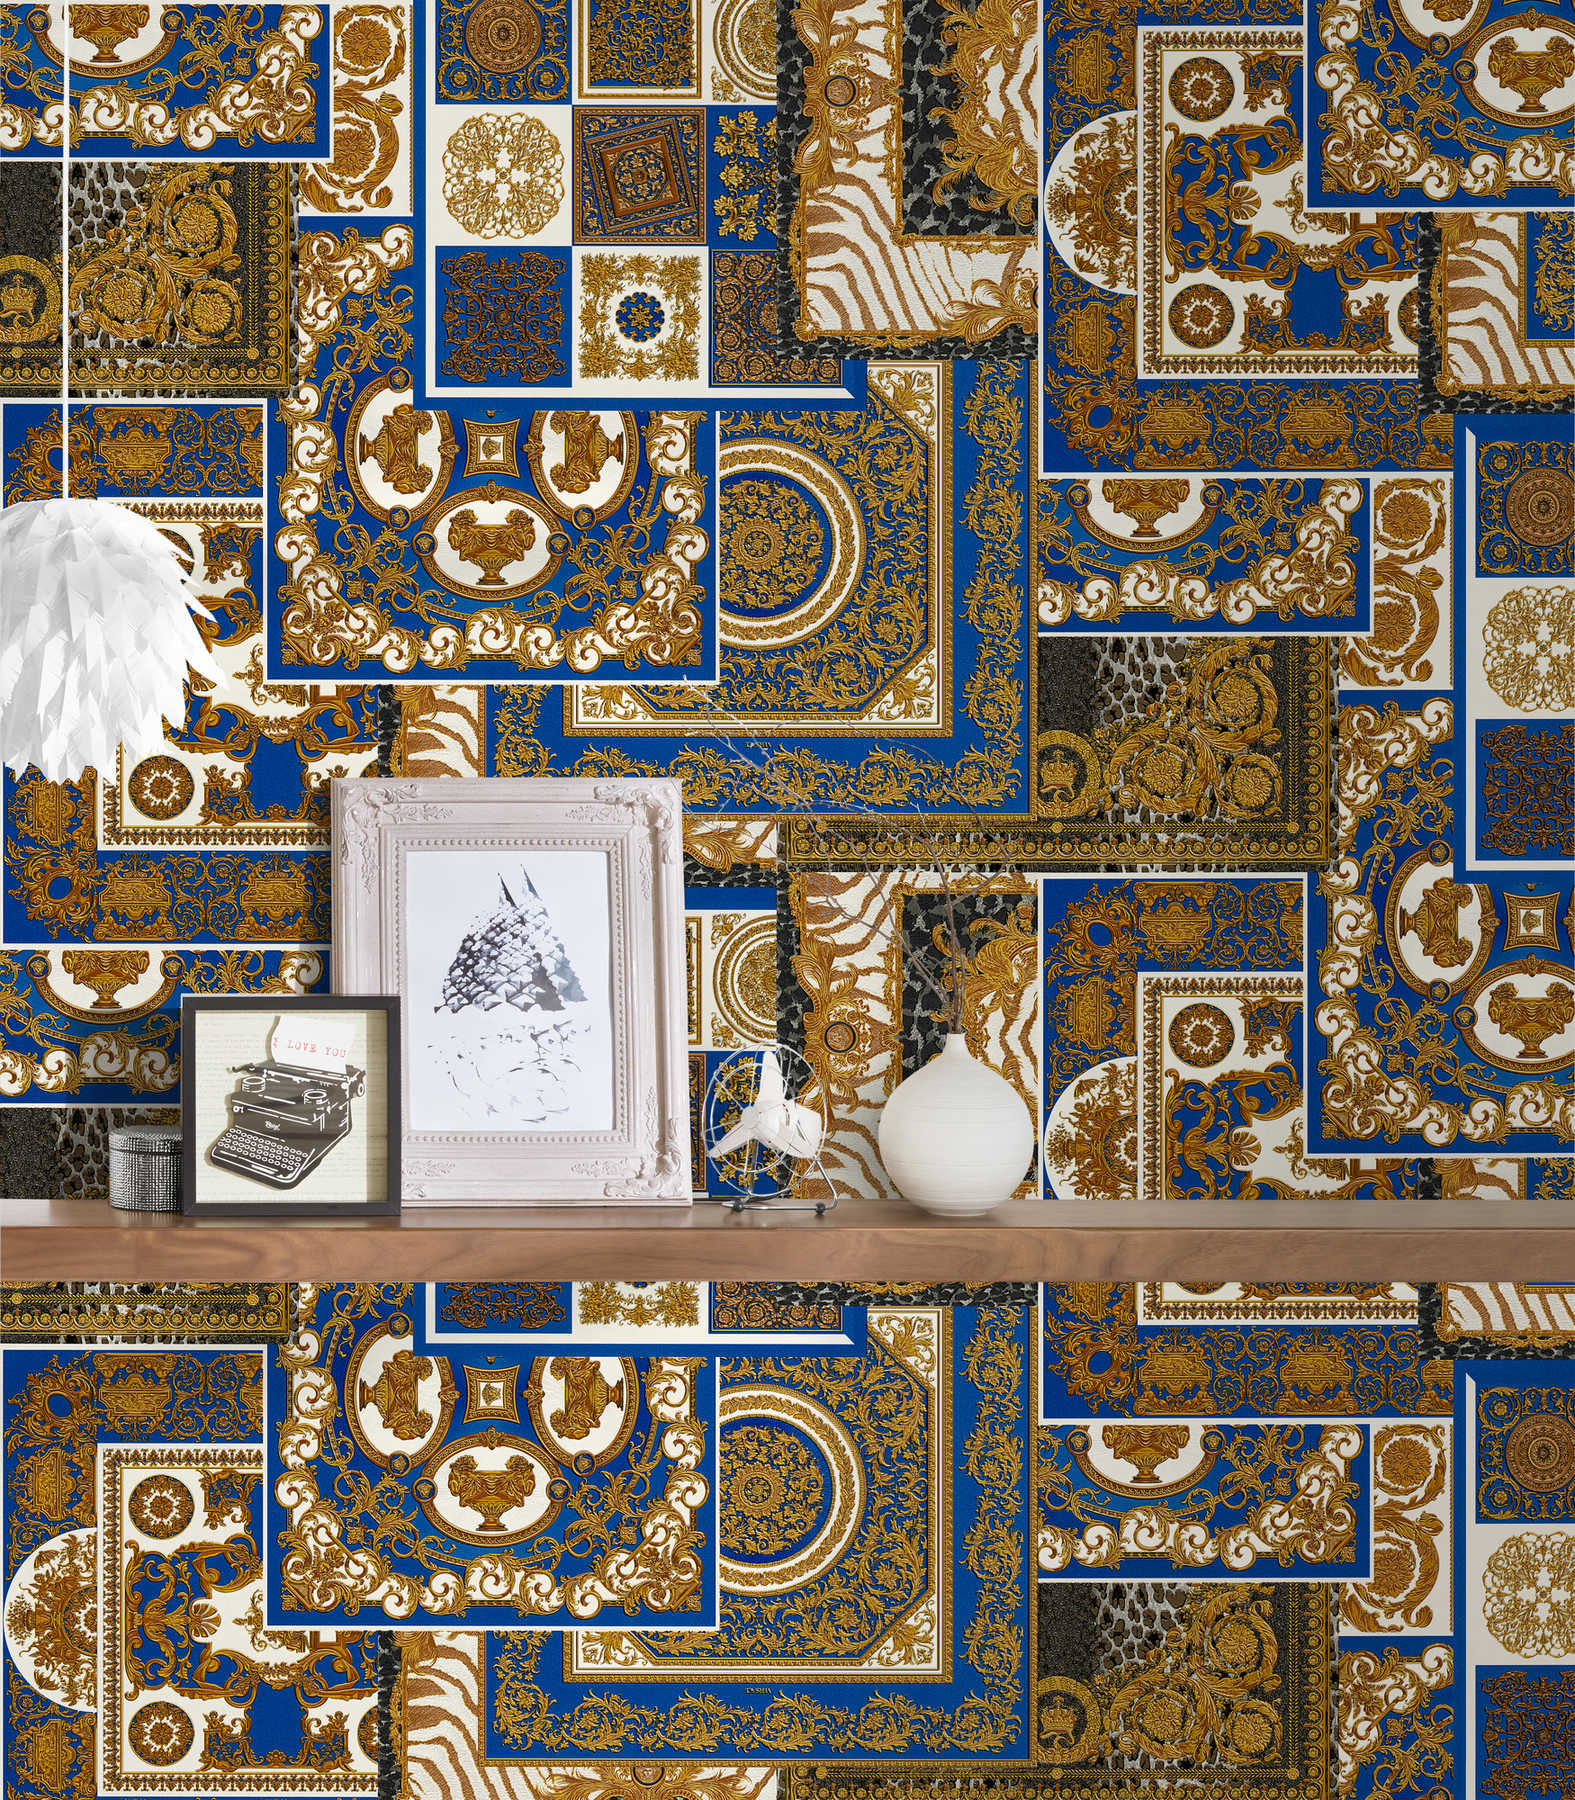             VERSACE Home wallpaper baroque details & animal print - gold, blue, white
        